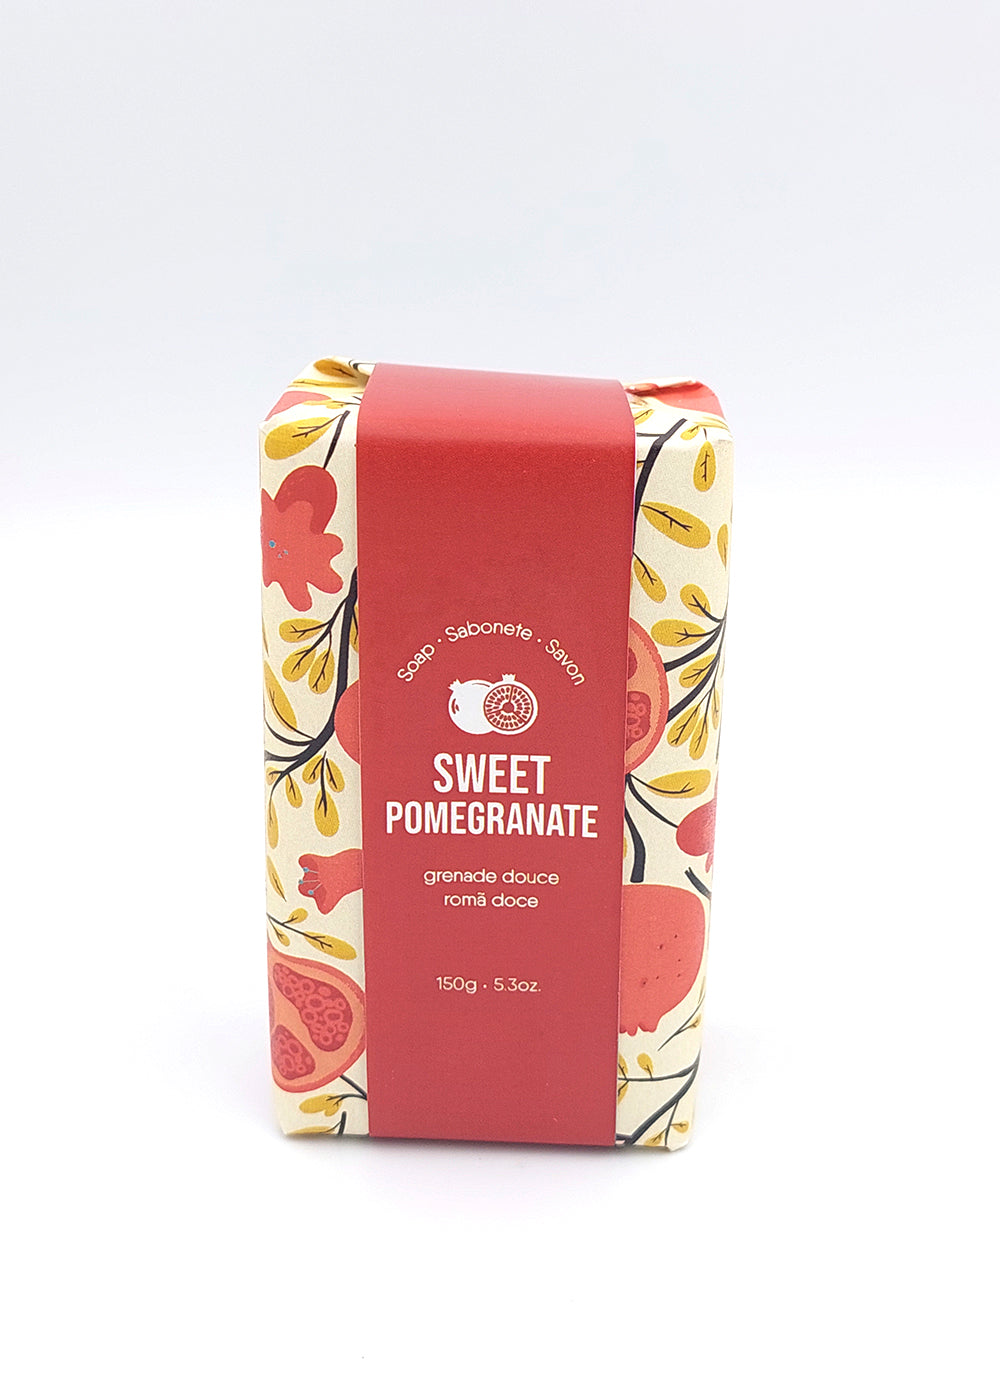 Essências de Portugal סבון אביב פורטוגלי Sweet Pomegrante